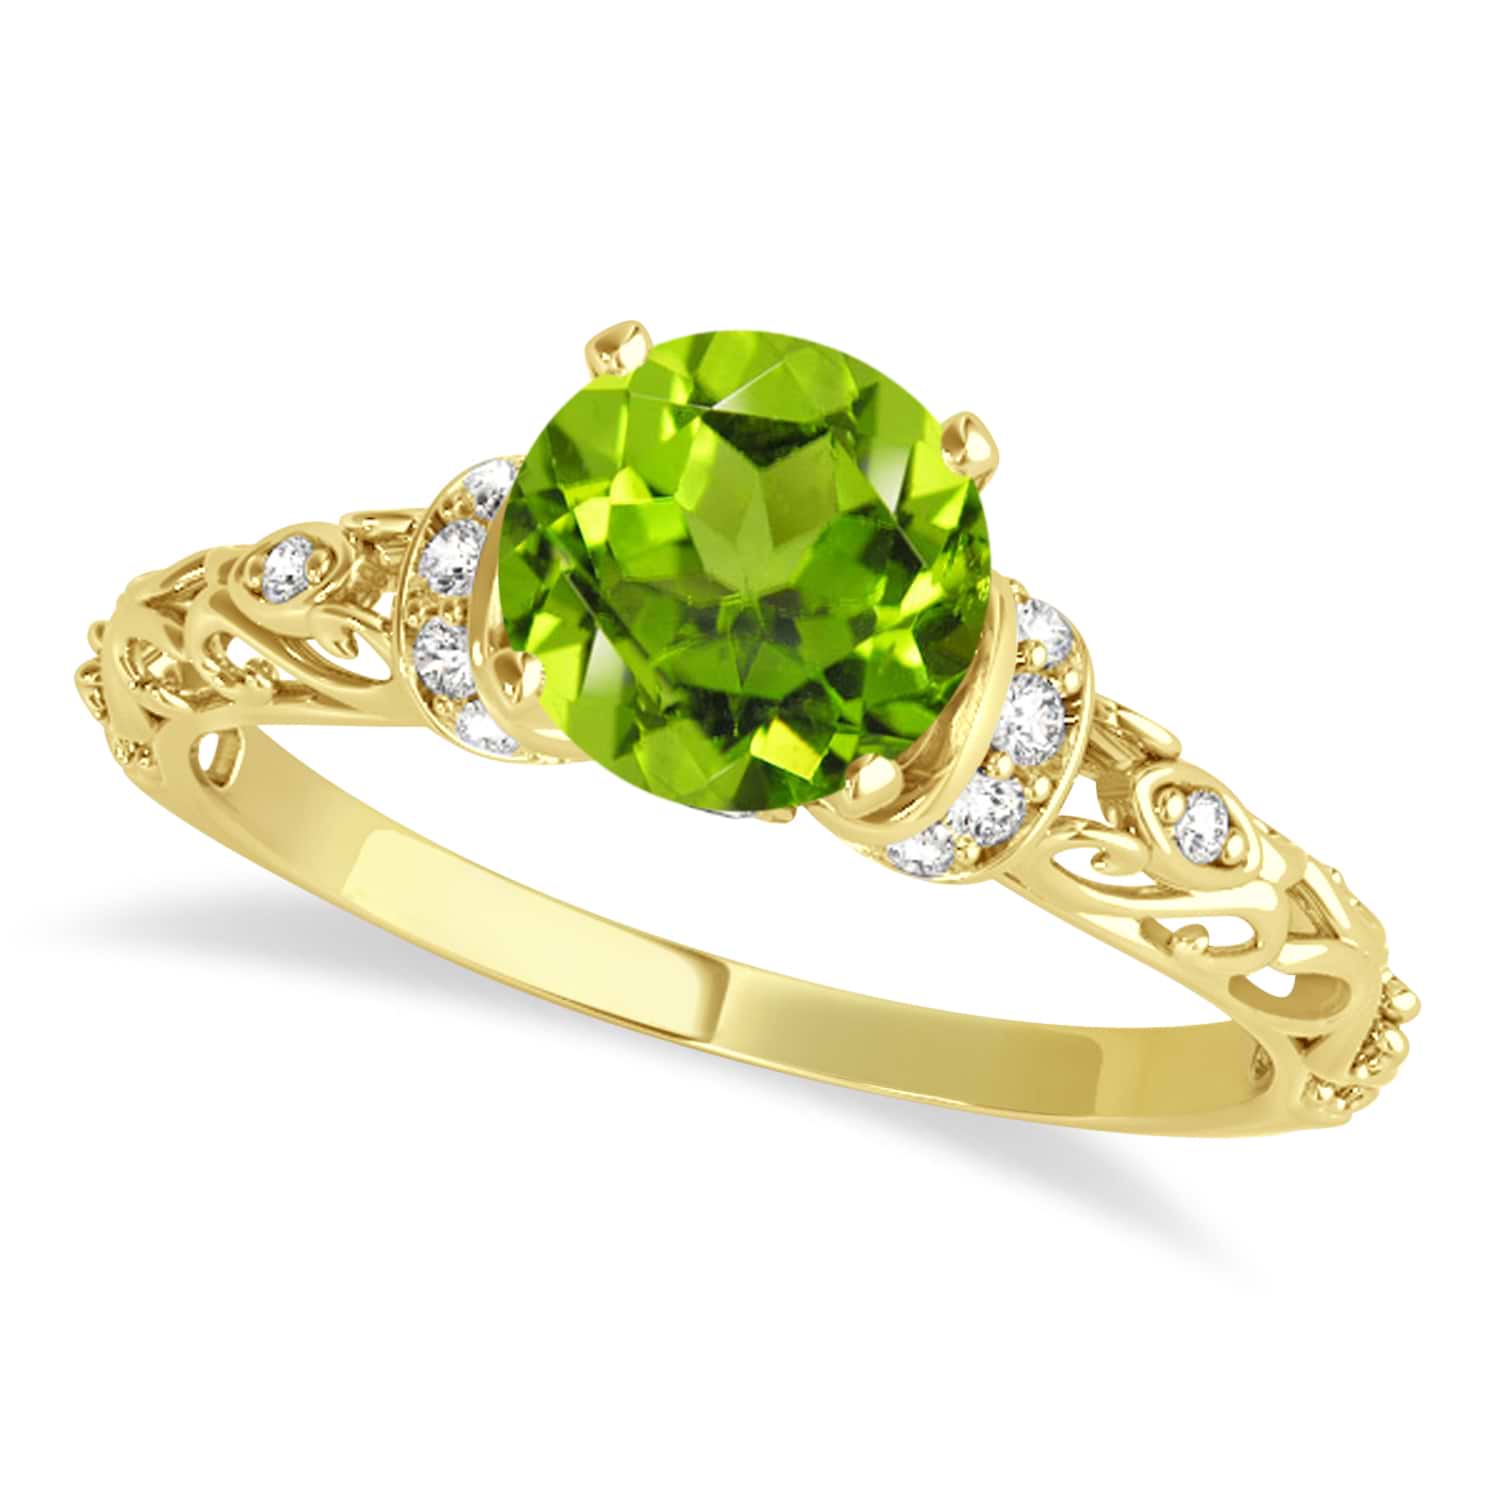 Peridot & Diamond Antique Engagement Ring 18k Yellow Gold (1.62ct)